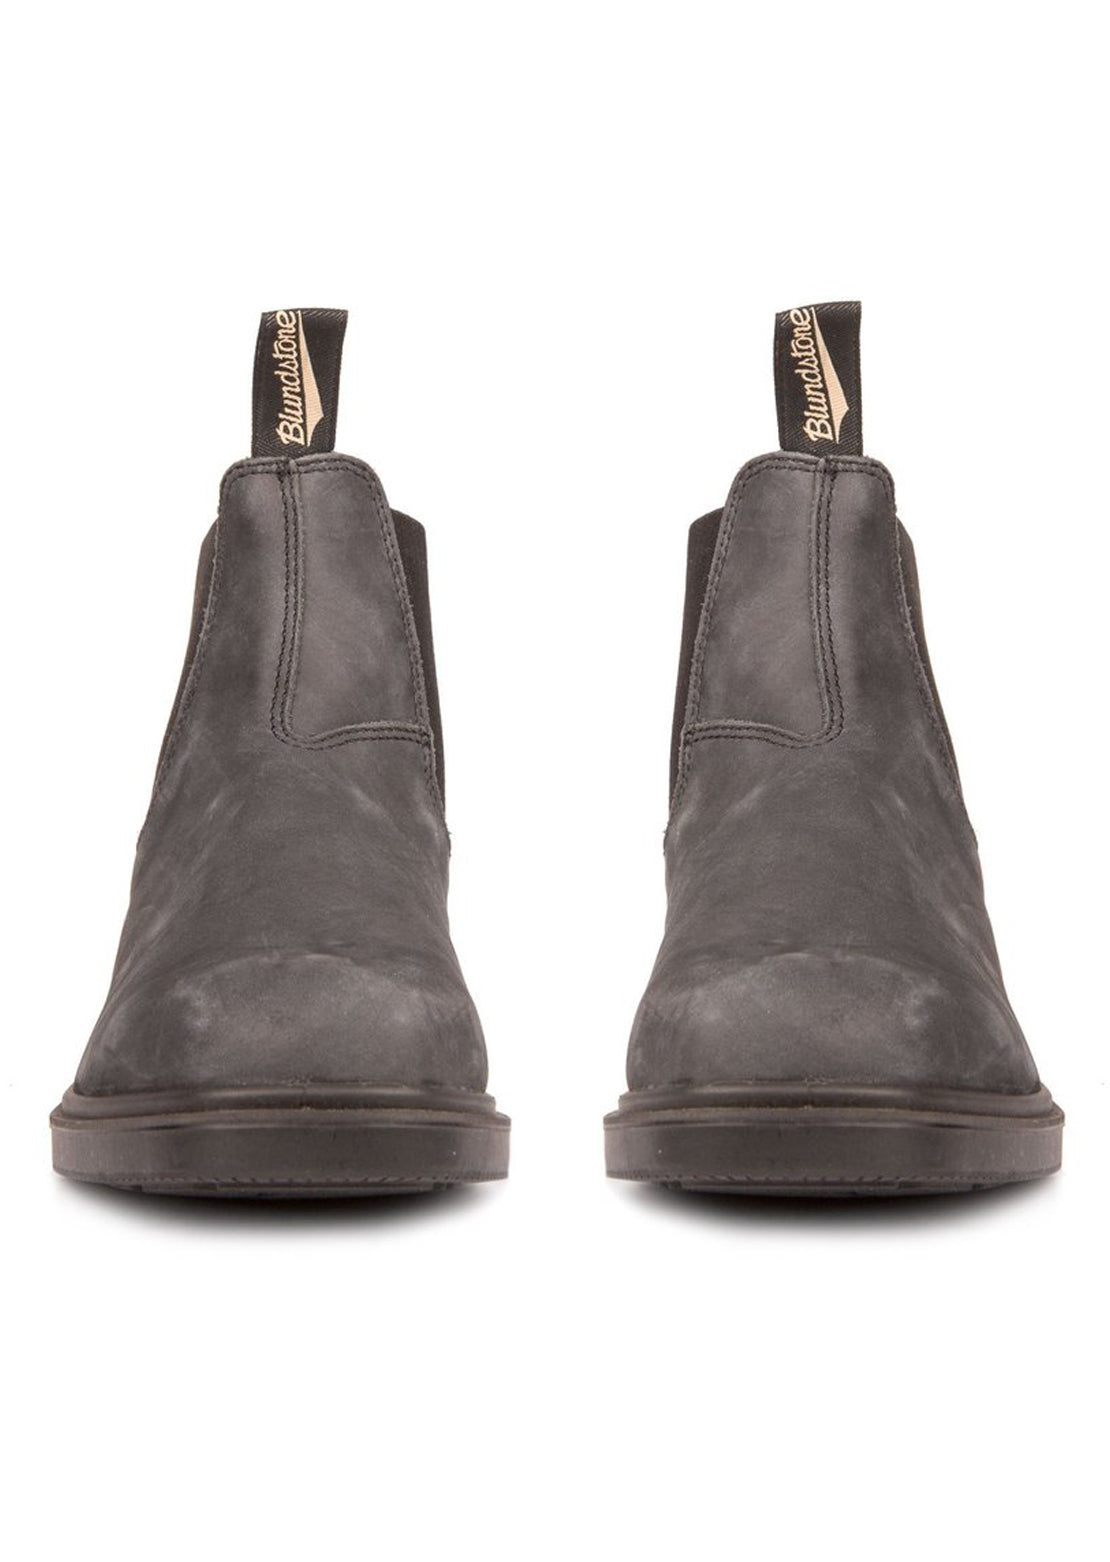 Blundstone 1308 Chisel Toe Boots (1308) Rustic Black